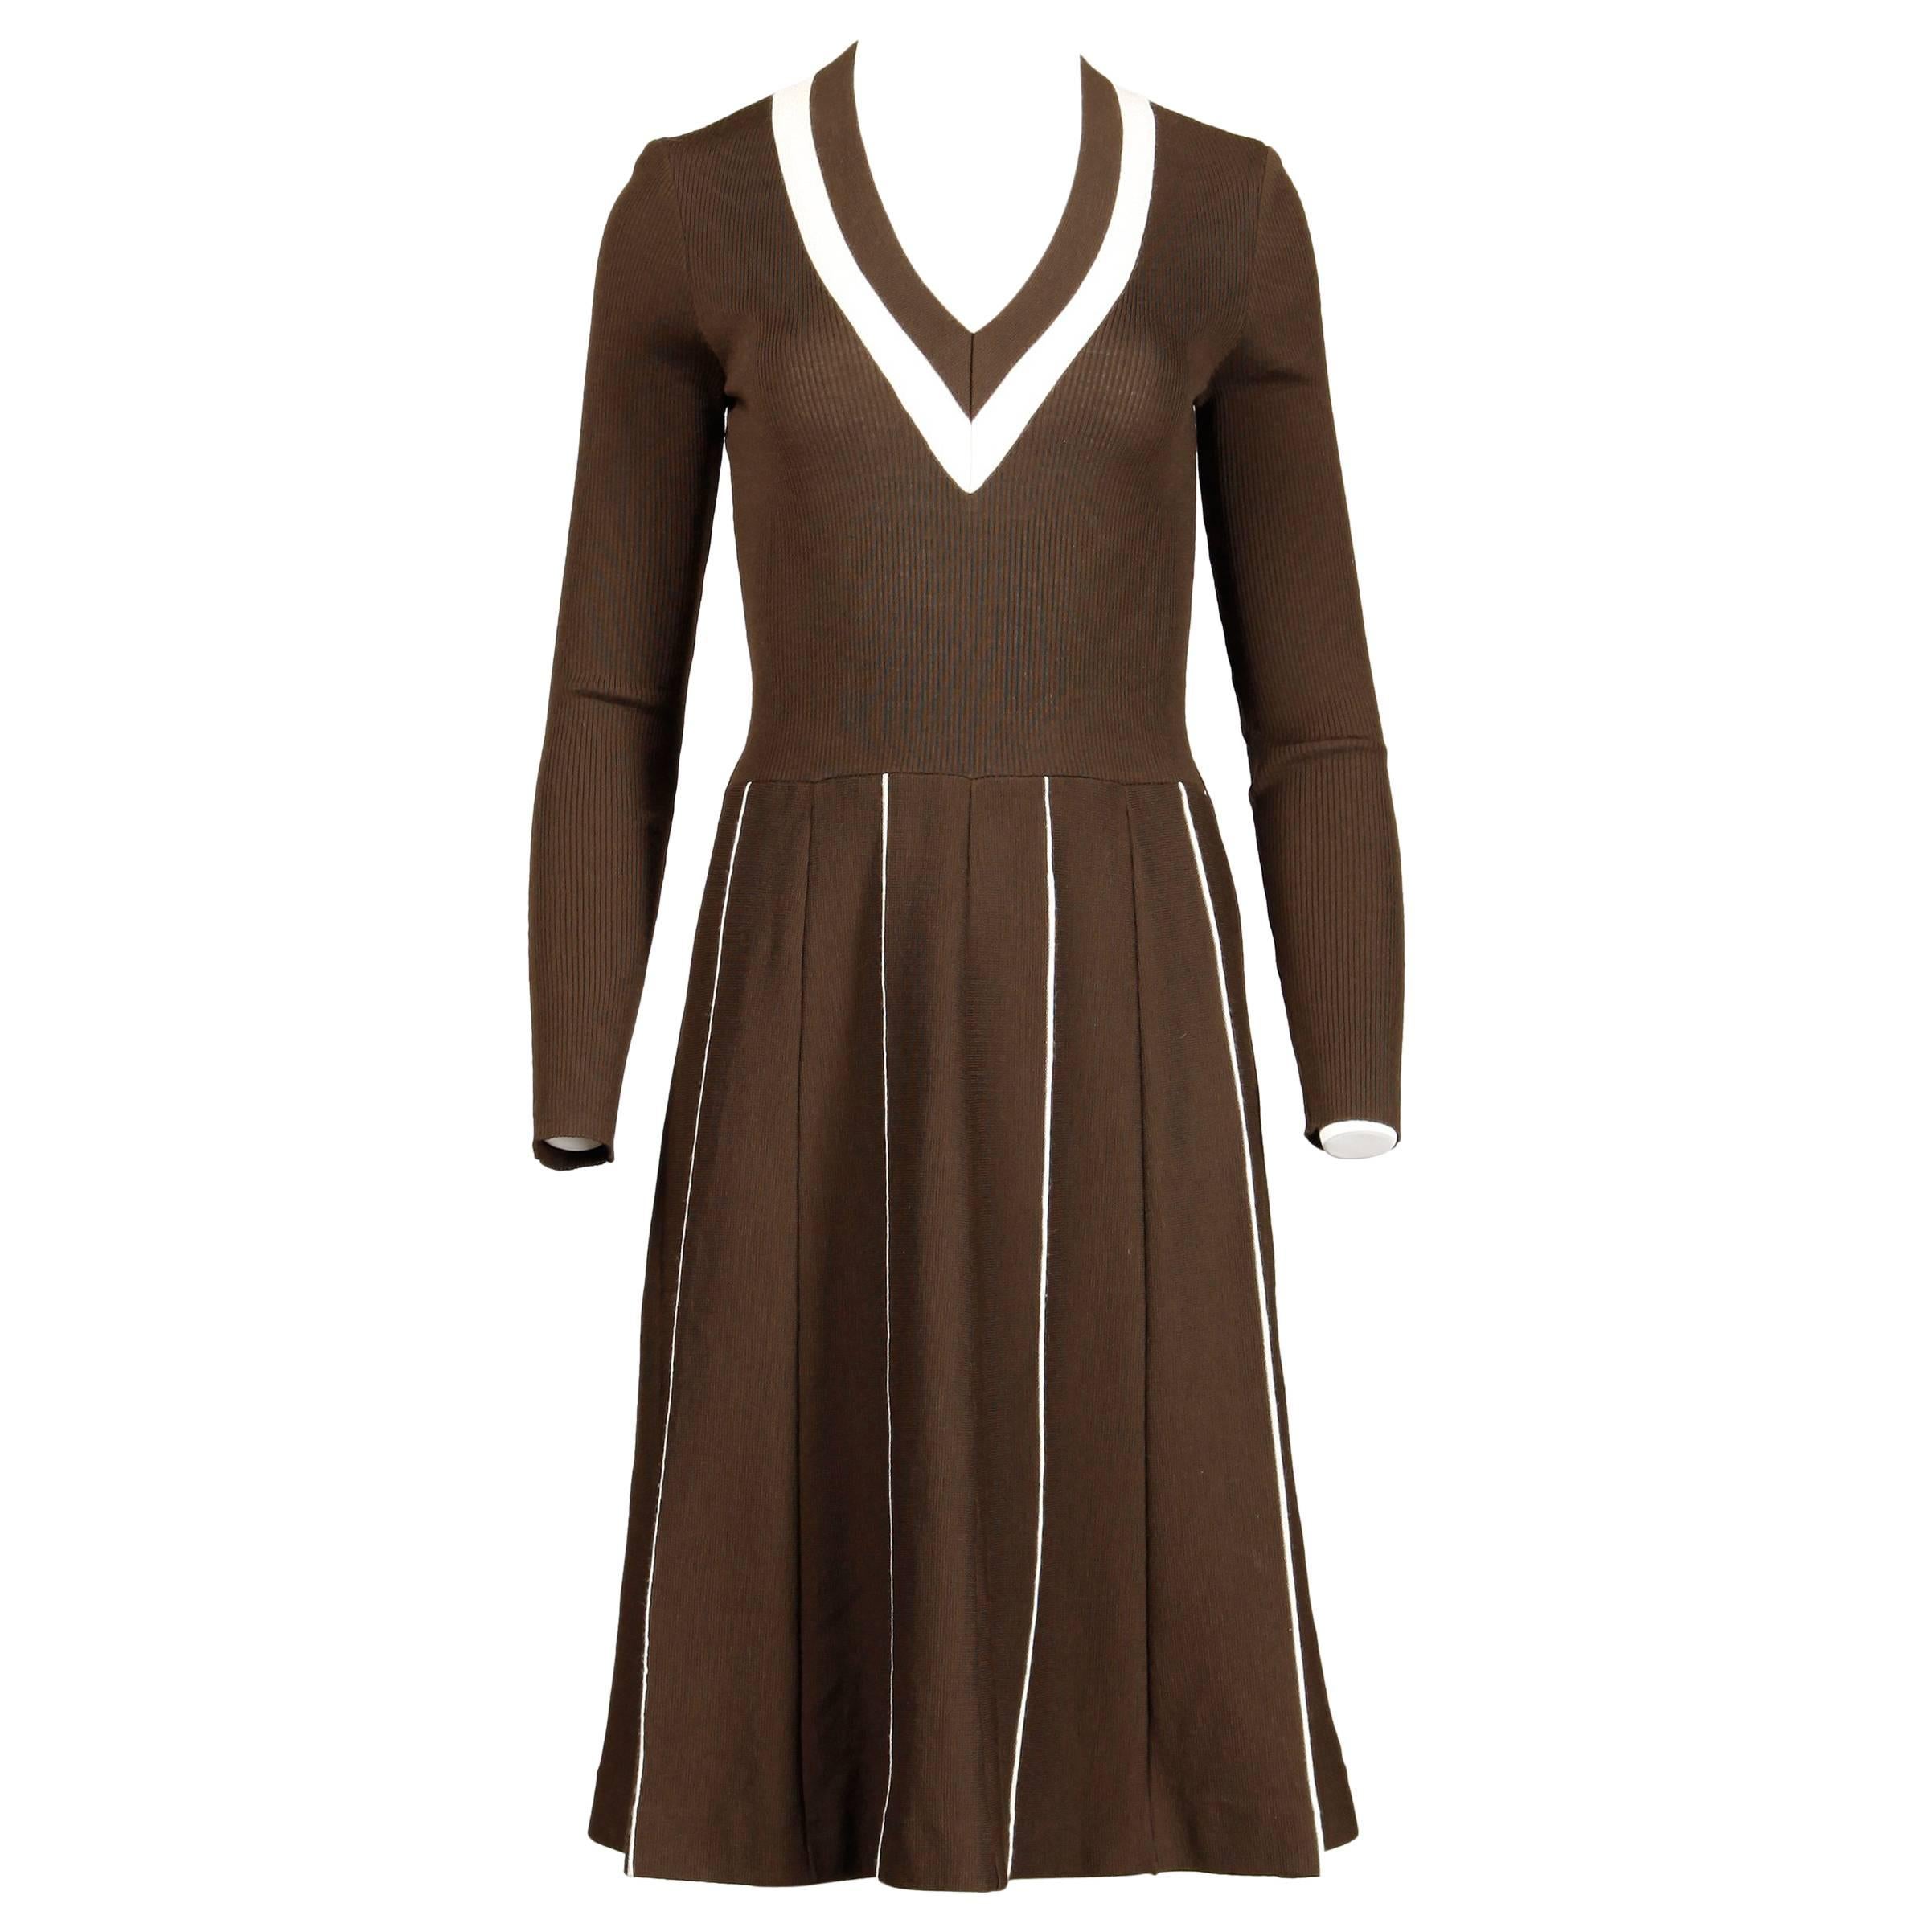 Unworn Crissa 1970s Vintage 100% Wool Brown Knit Dress with Original Tags